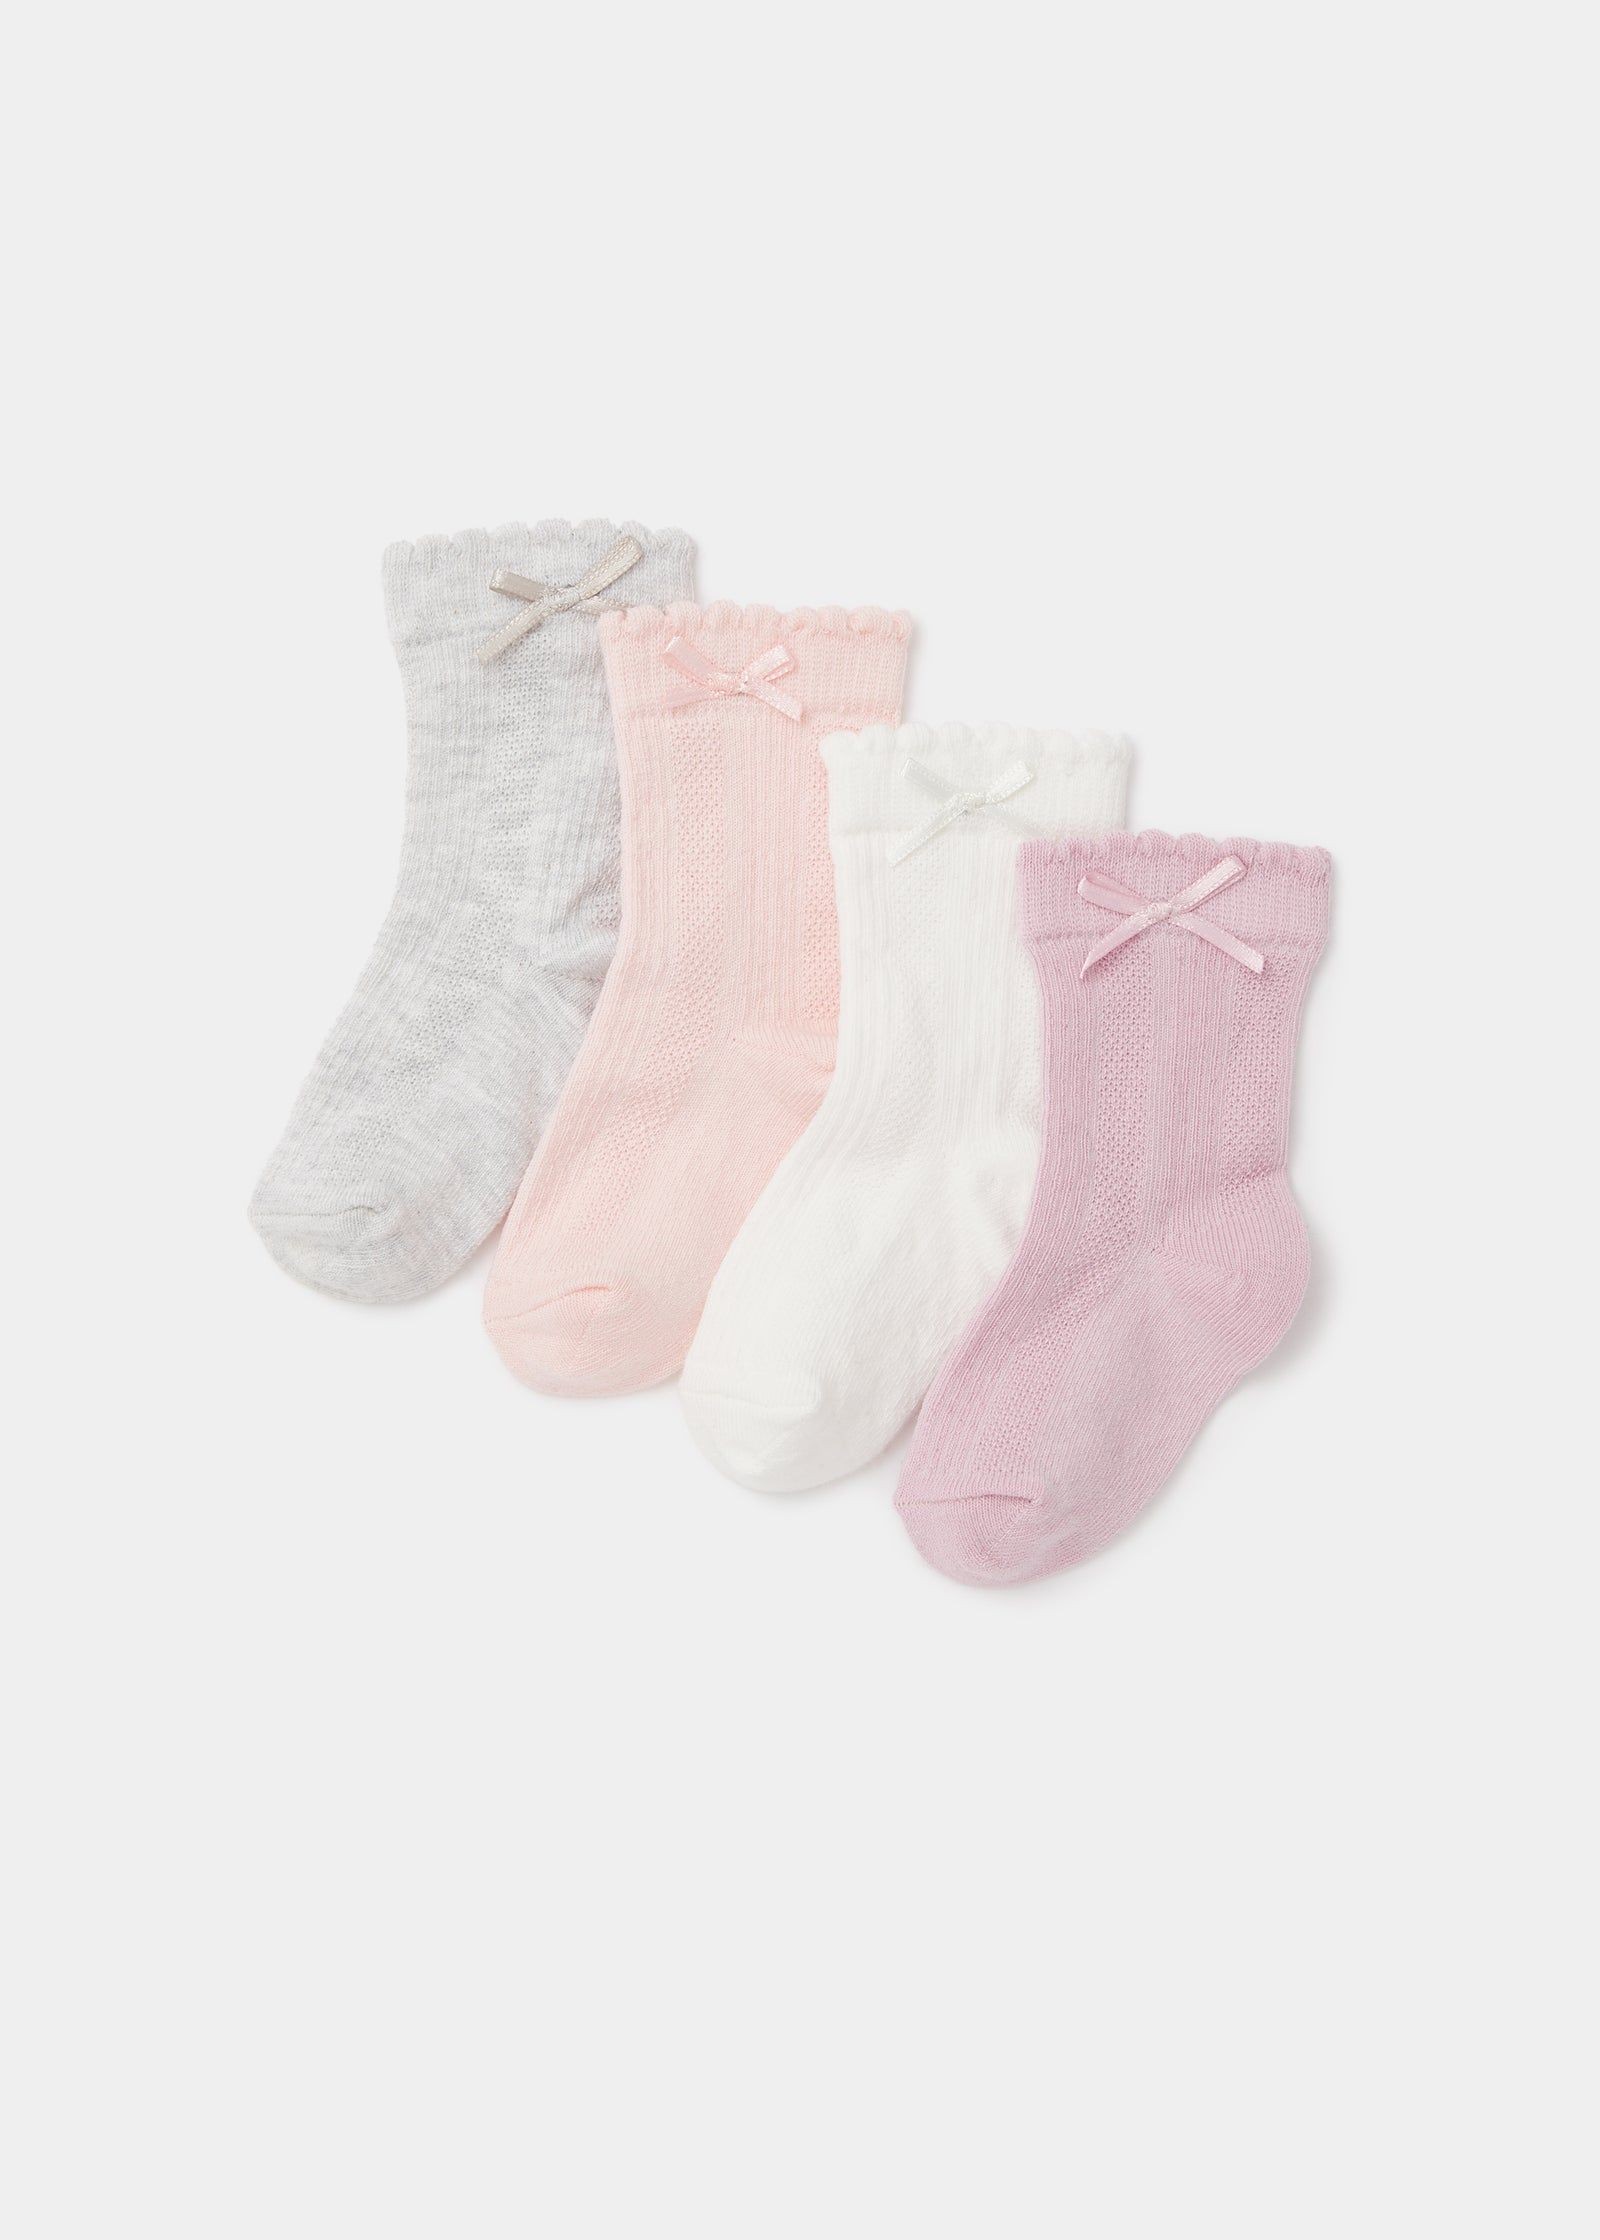 Baby Toddler Girls Tights Knit Cotton Pantyhose Dance Leggings Pants  Stockings, 5 Pack (5 Pack, 6-8 Years) price in UAE,  UAE